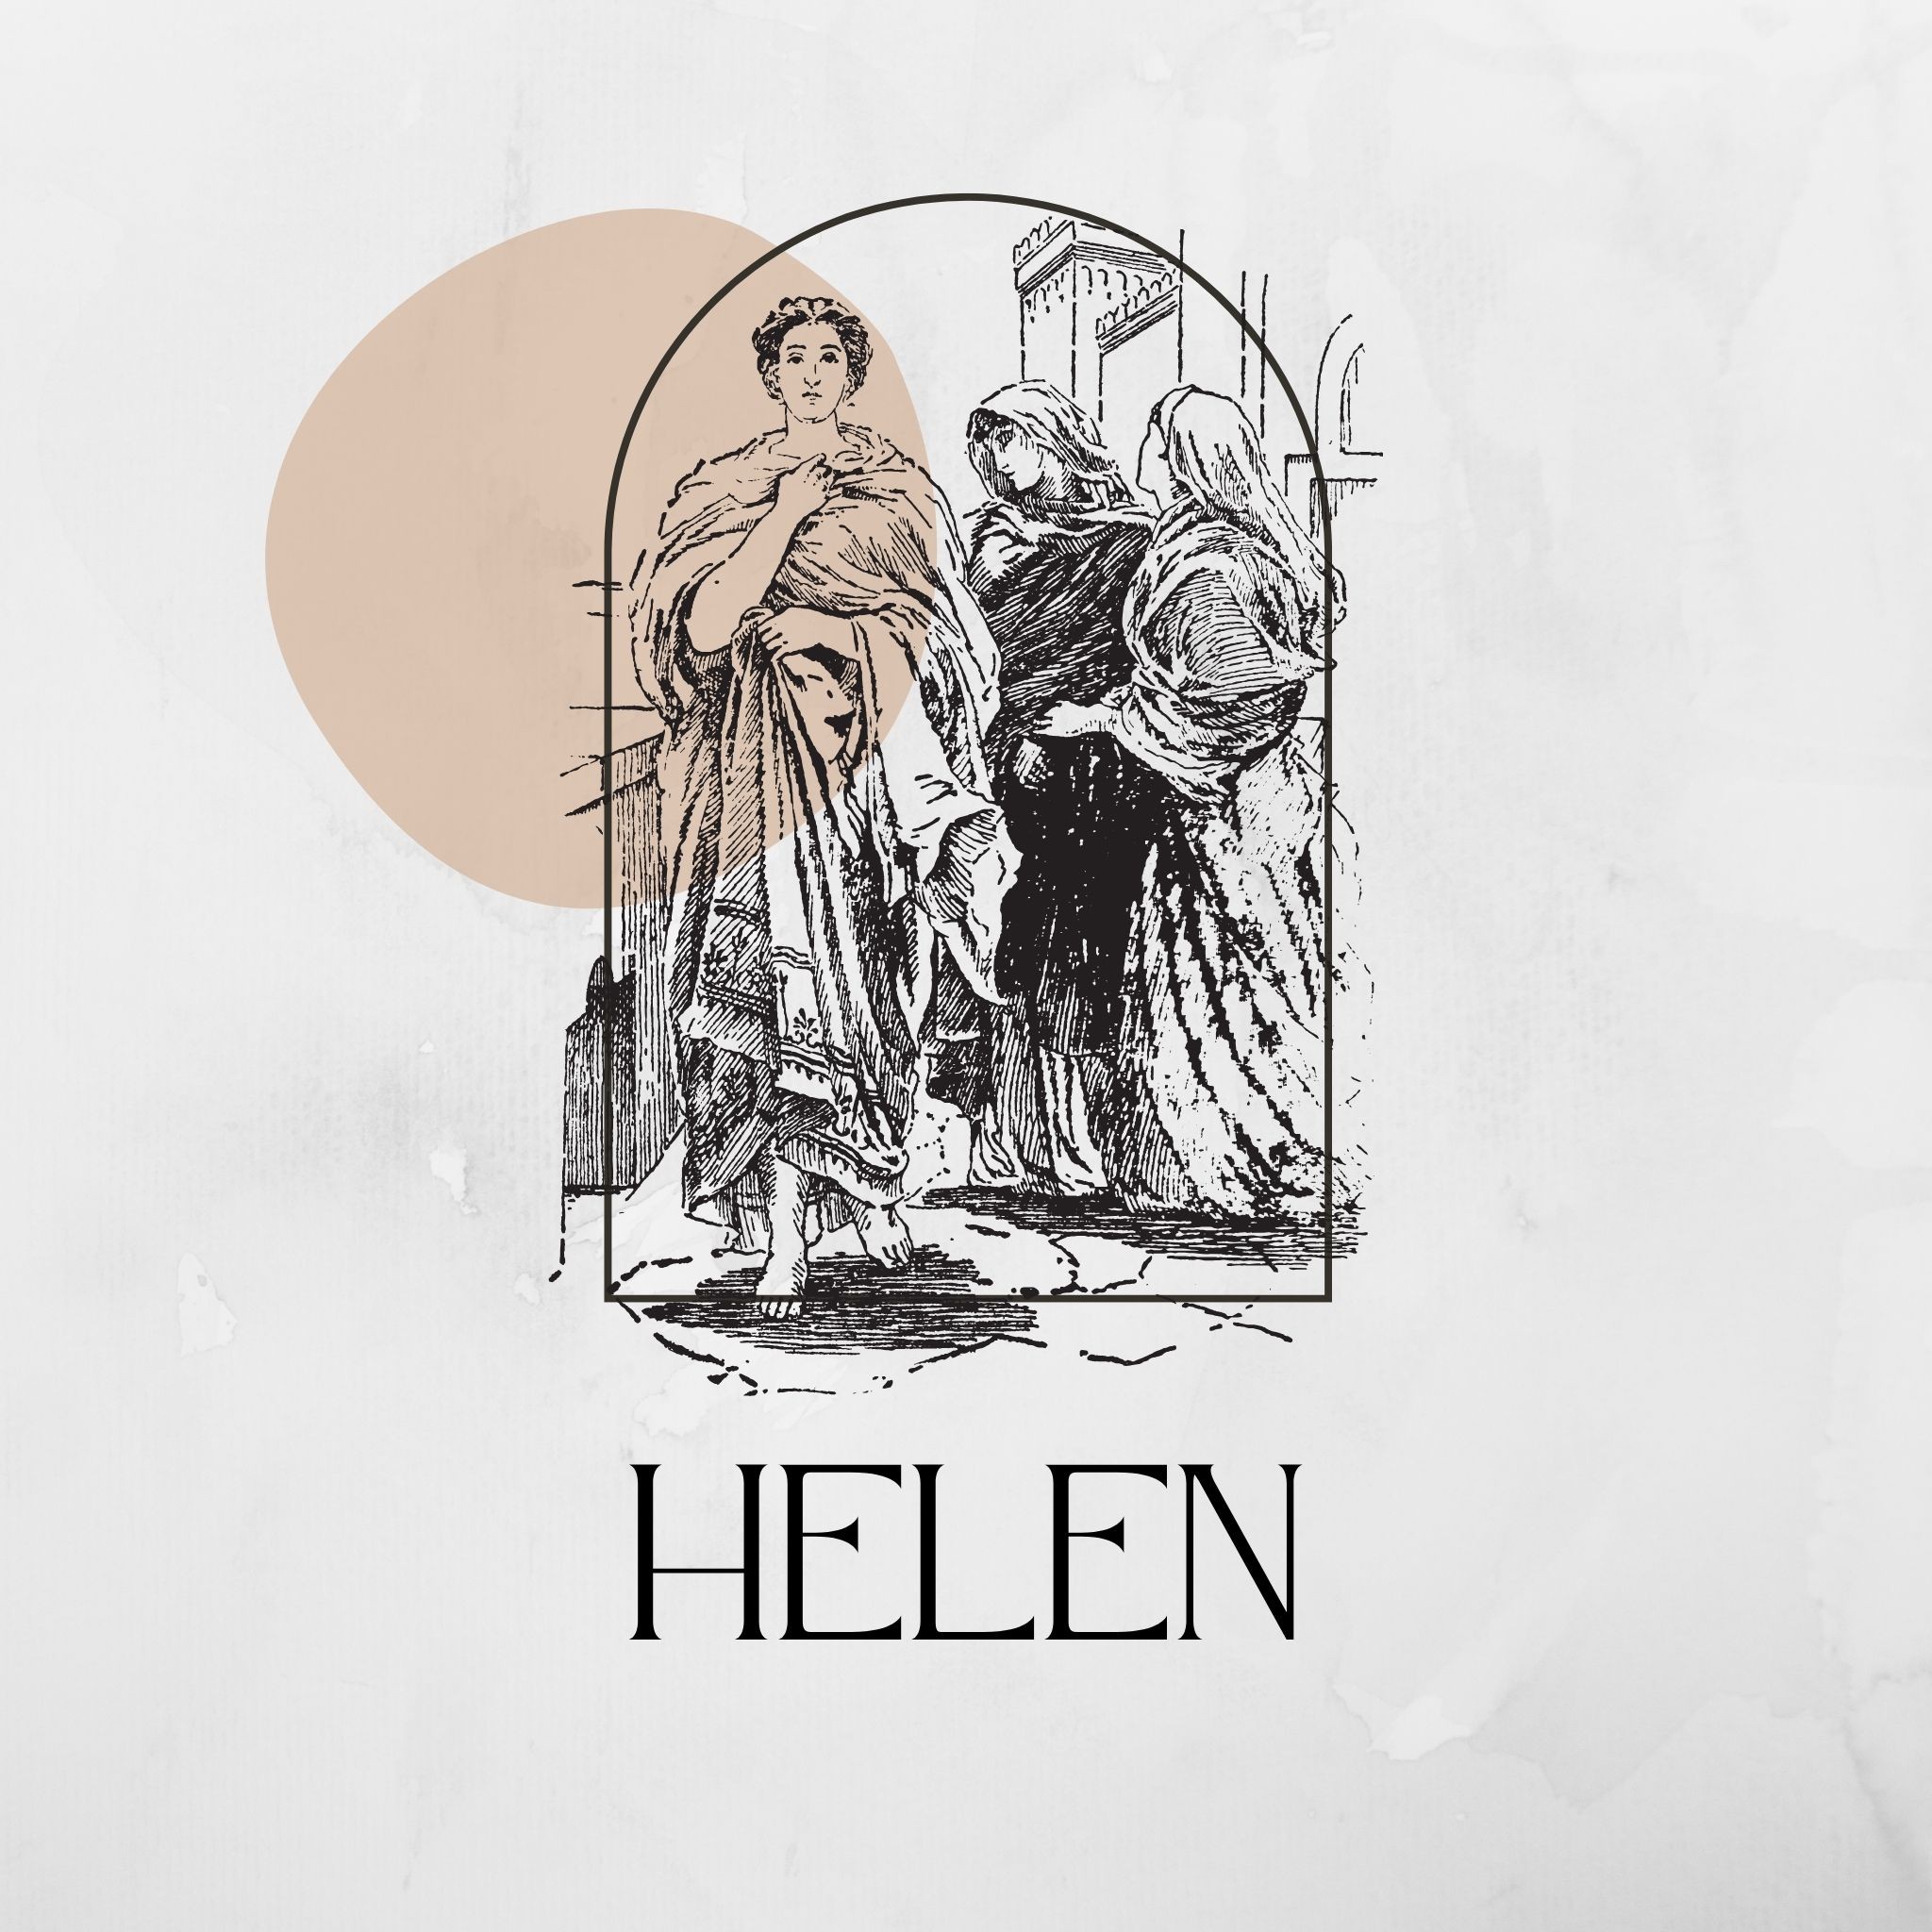 Helen Necklace with Pietersite Pendant